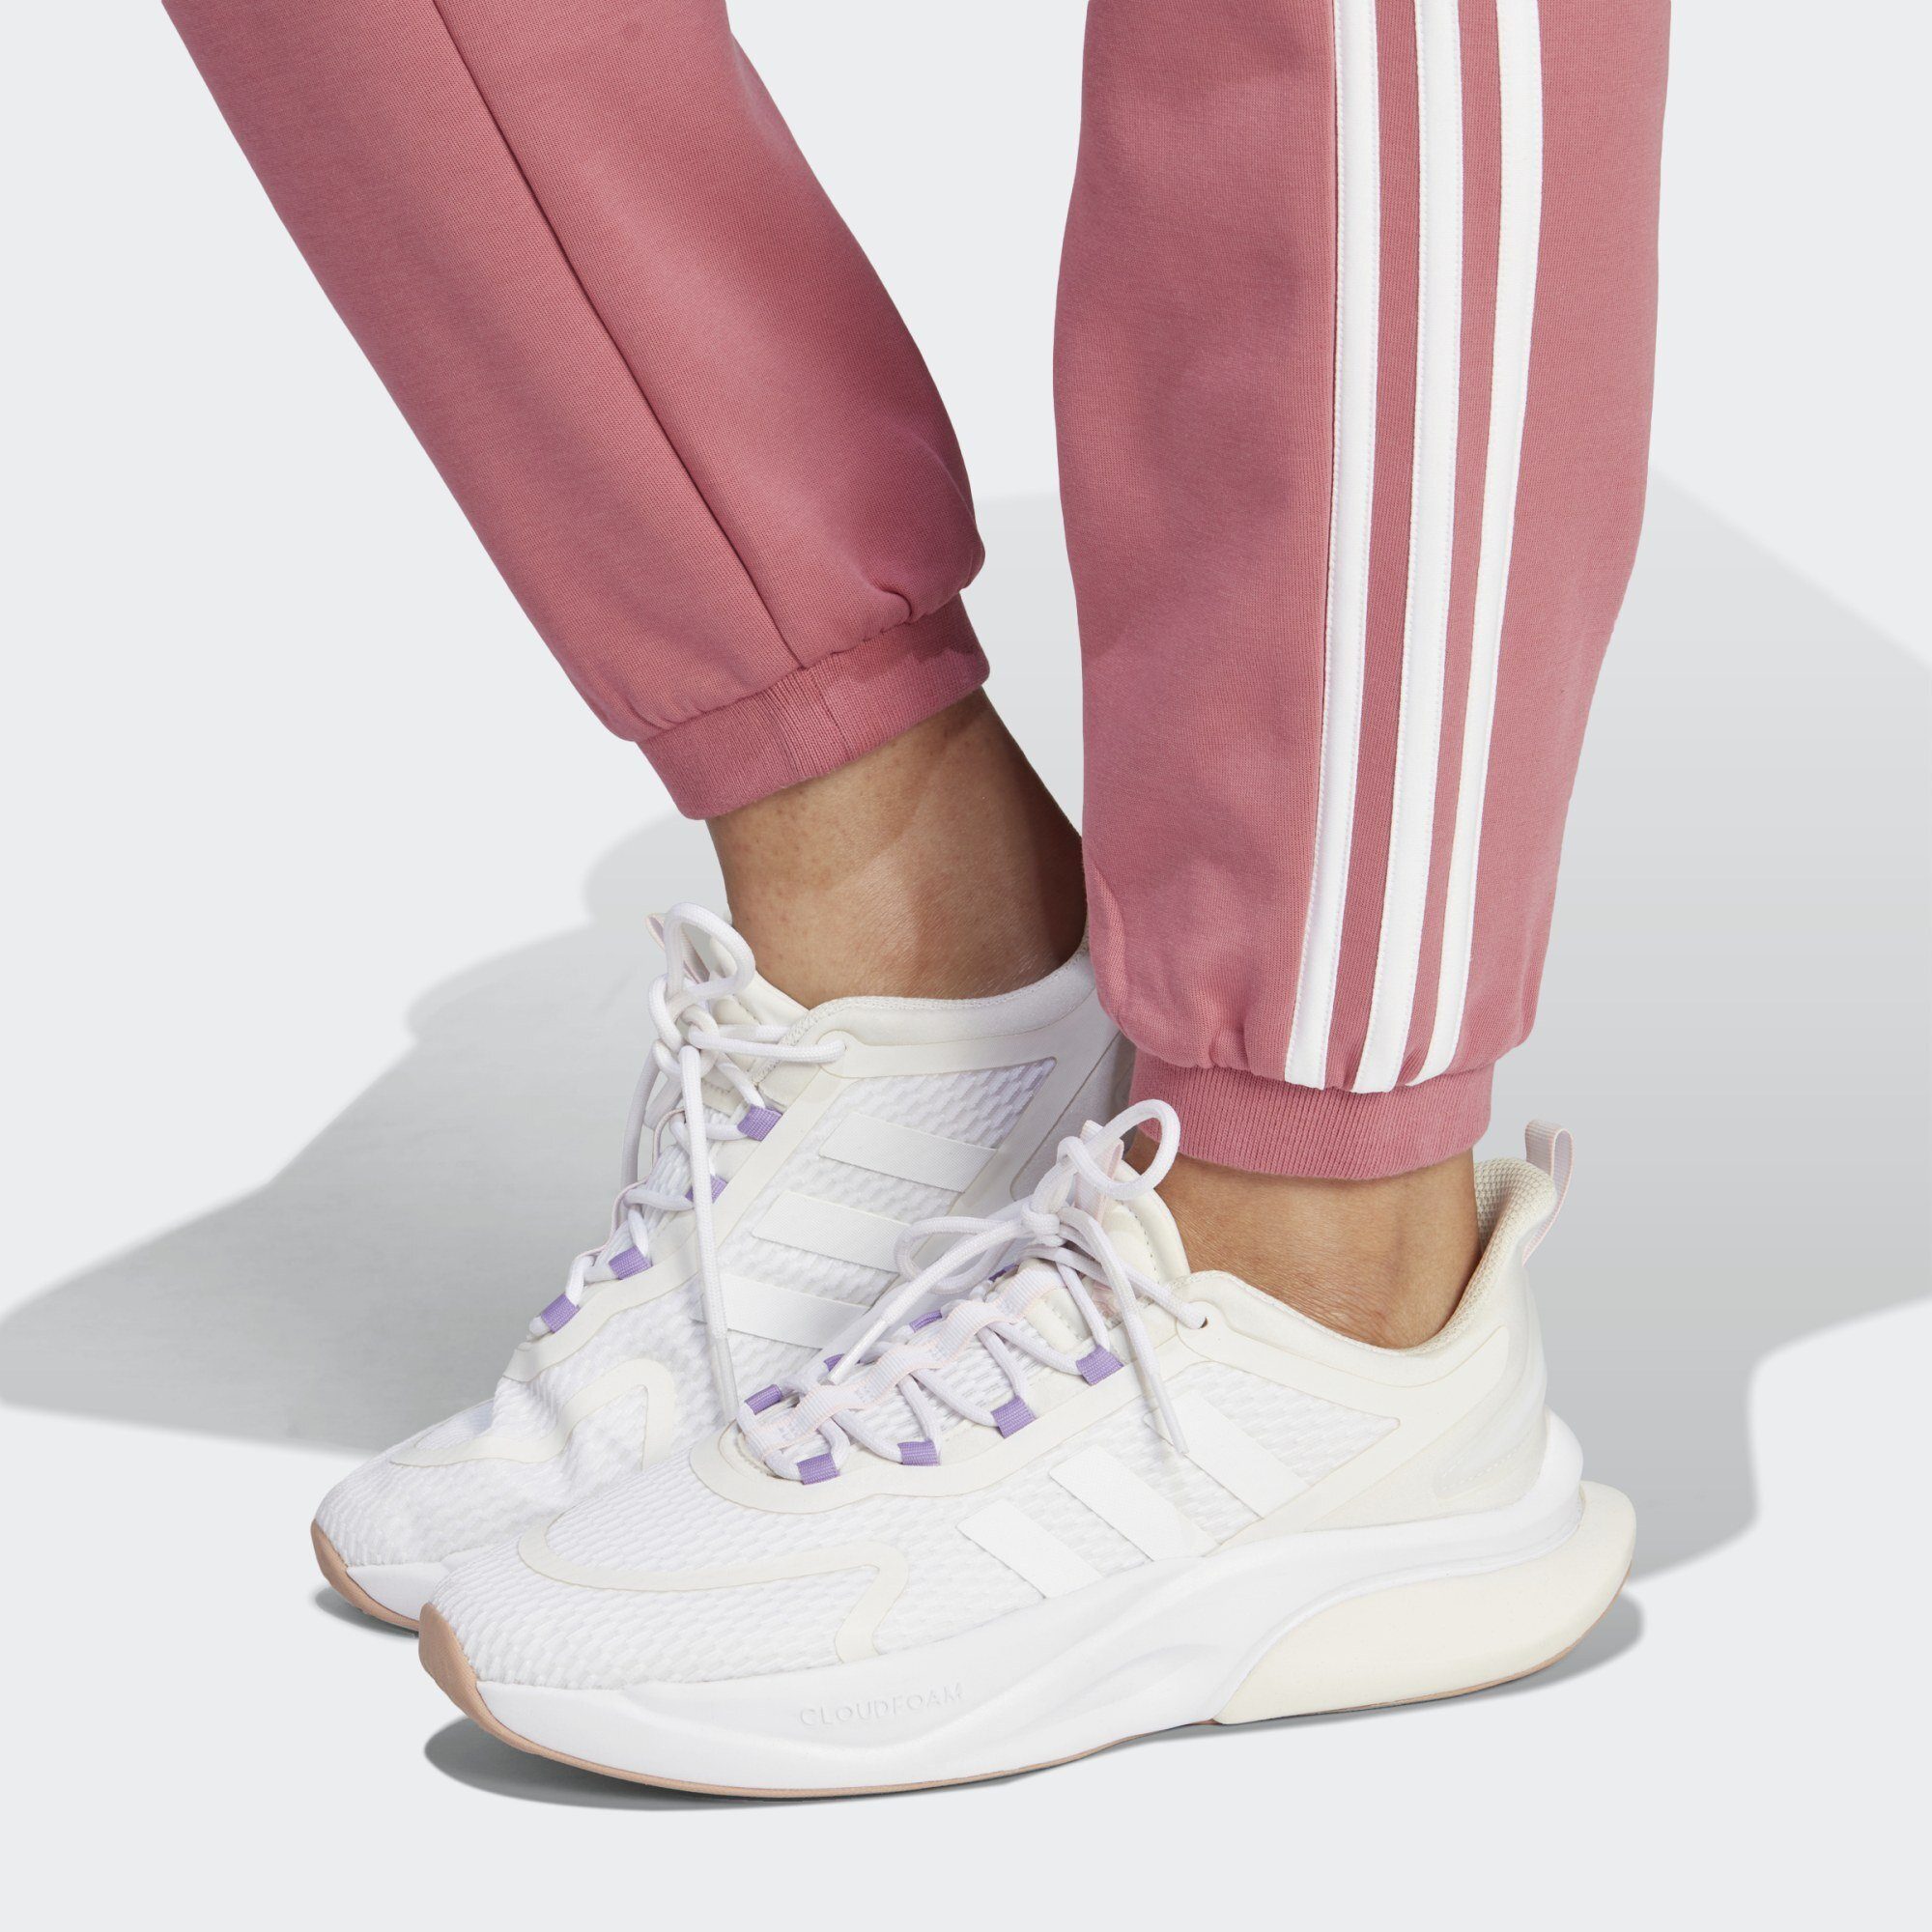 Sportswear / Pink Jogginghose White HOSE UMSTANDSMODE – MATERNITY Strata adidas